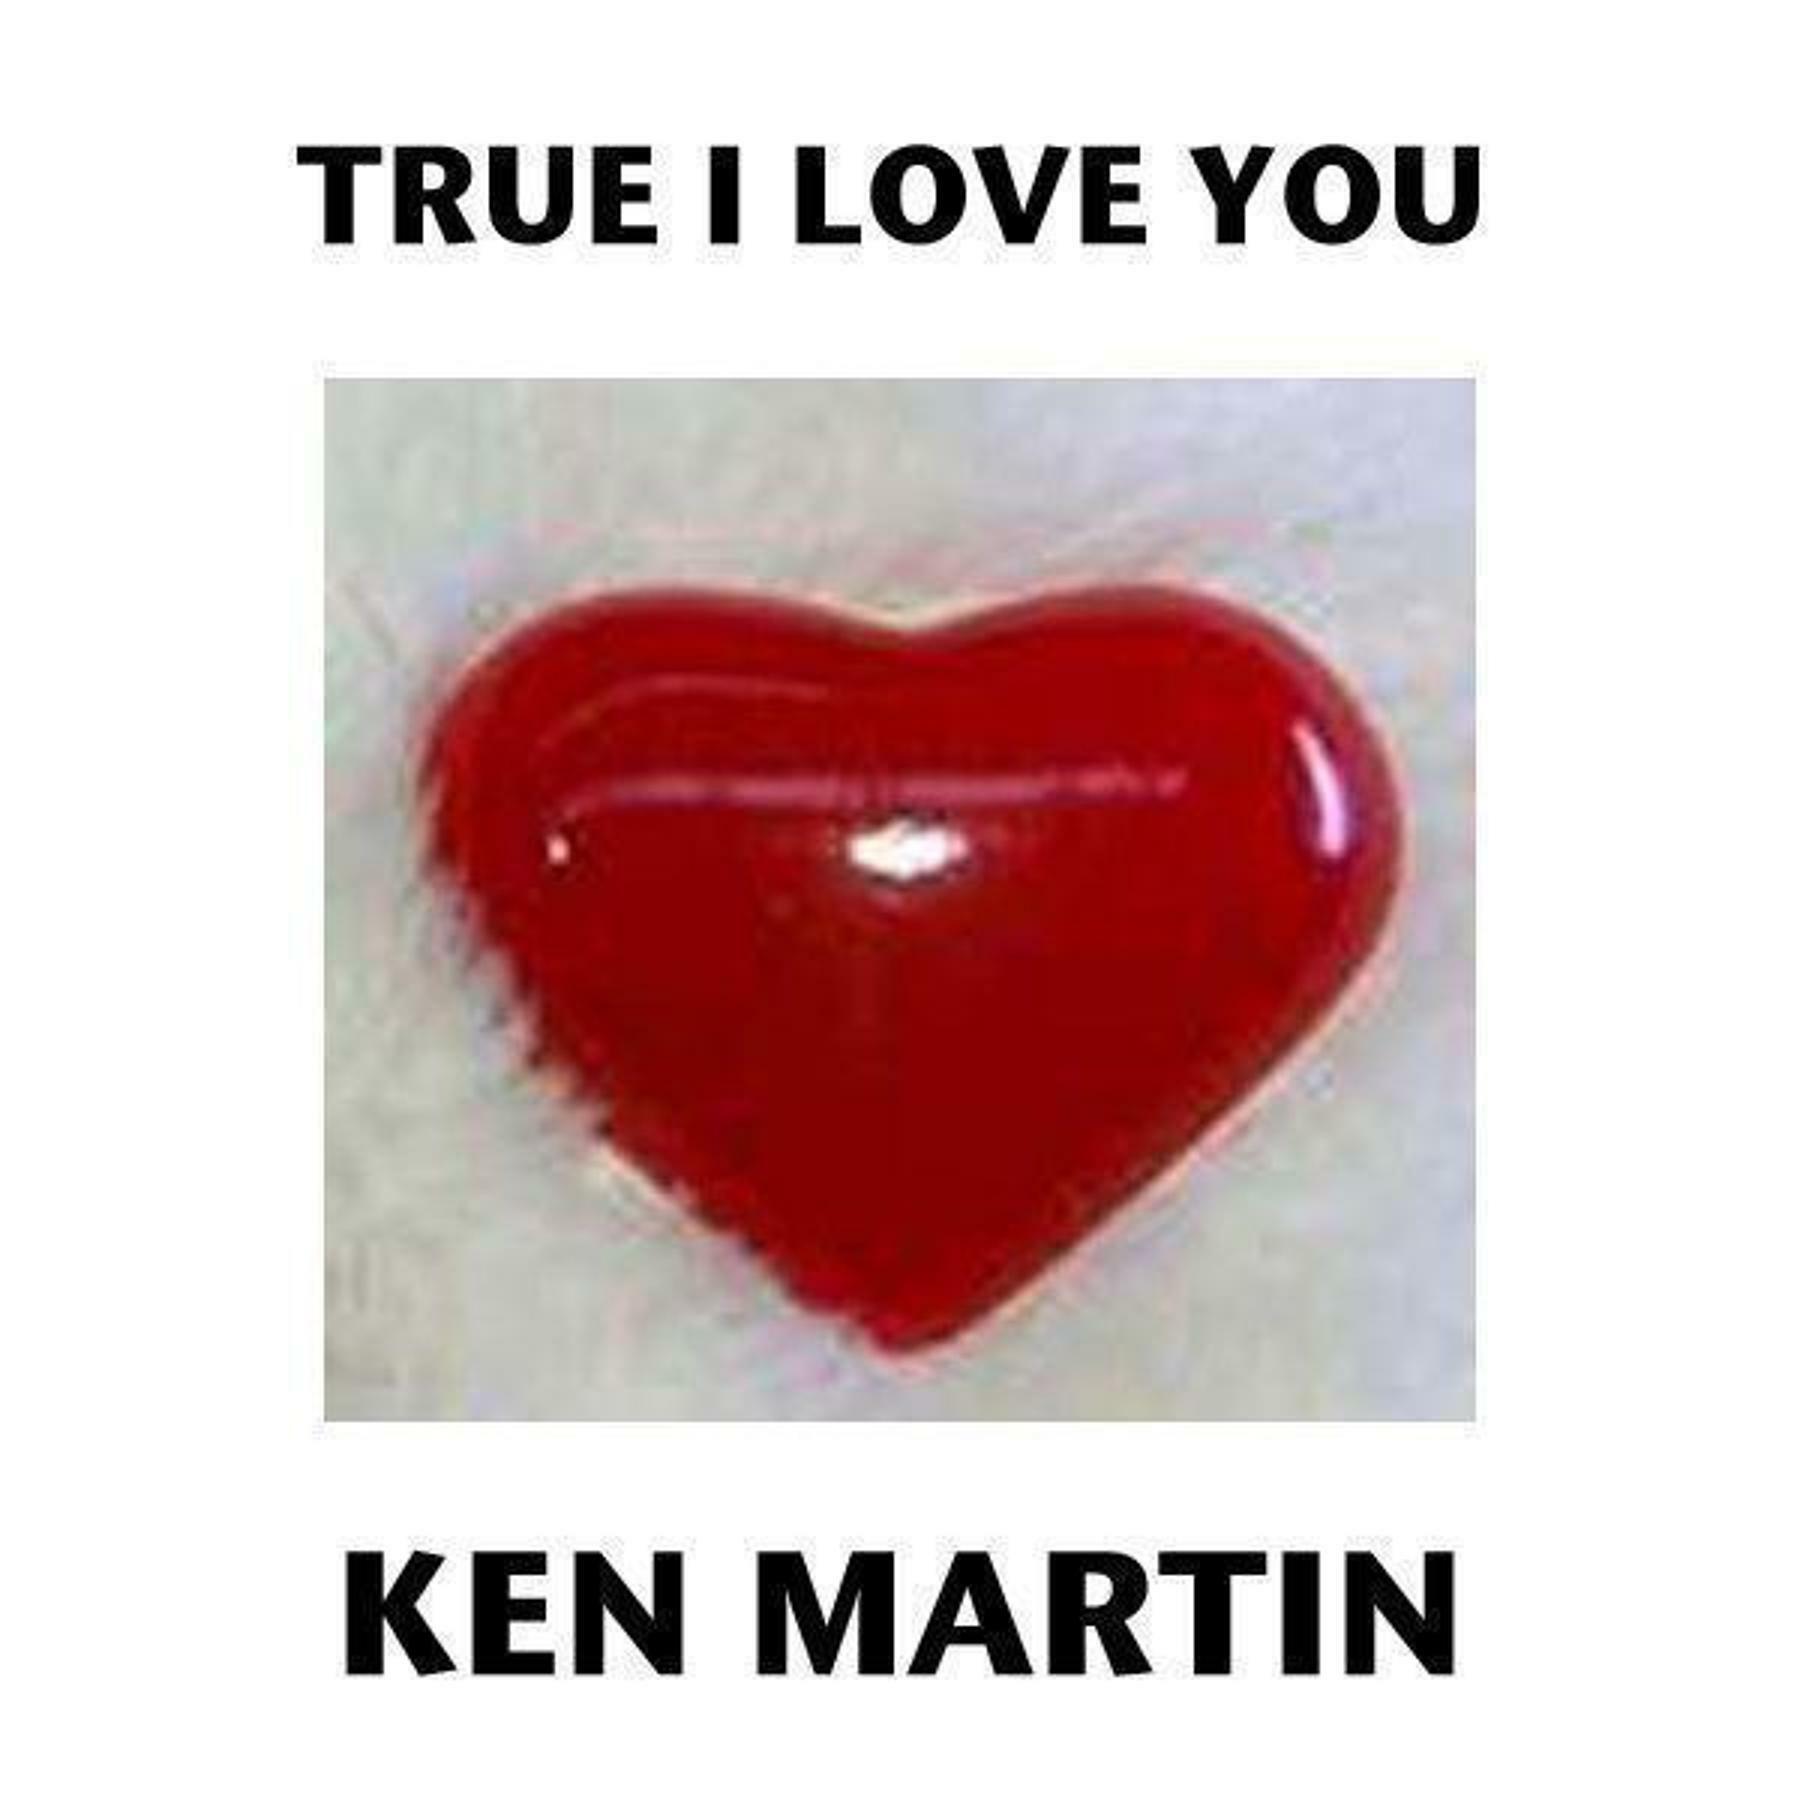 Stream Music from Artists Like Ken J. Martin | iHeart